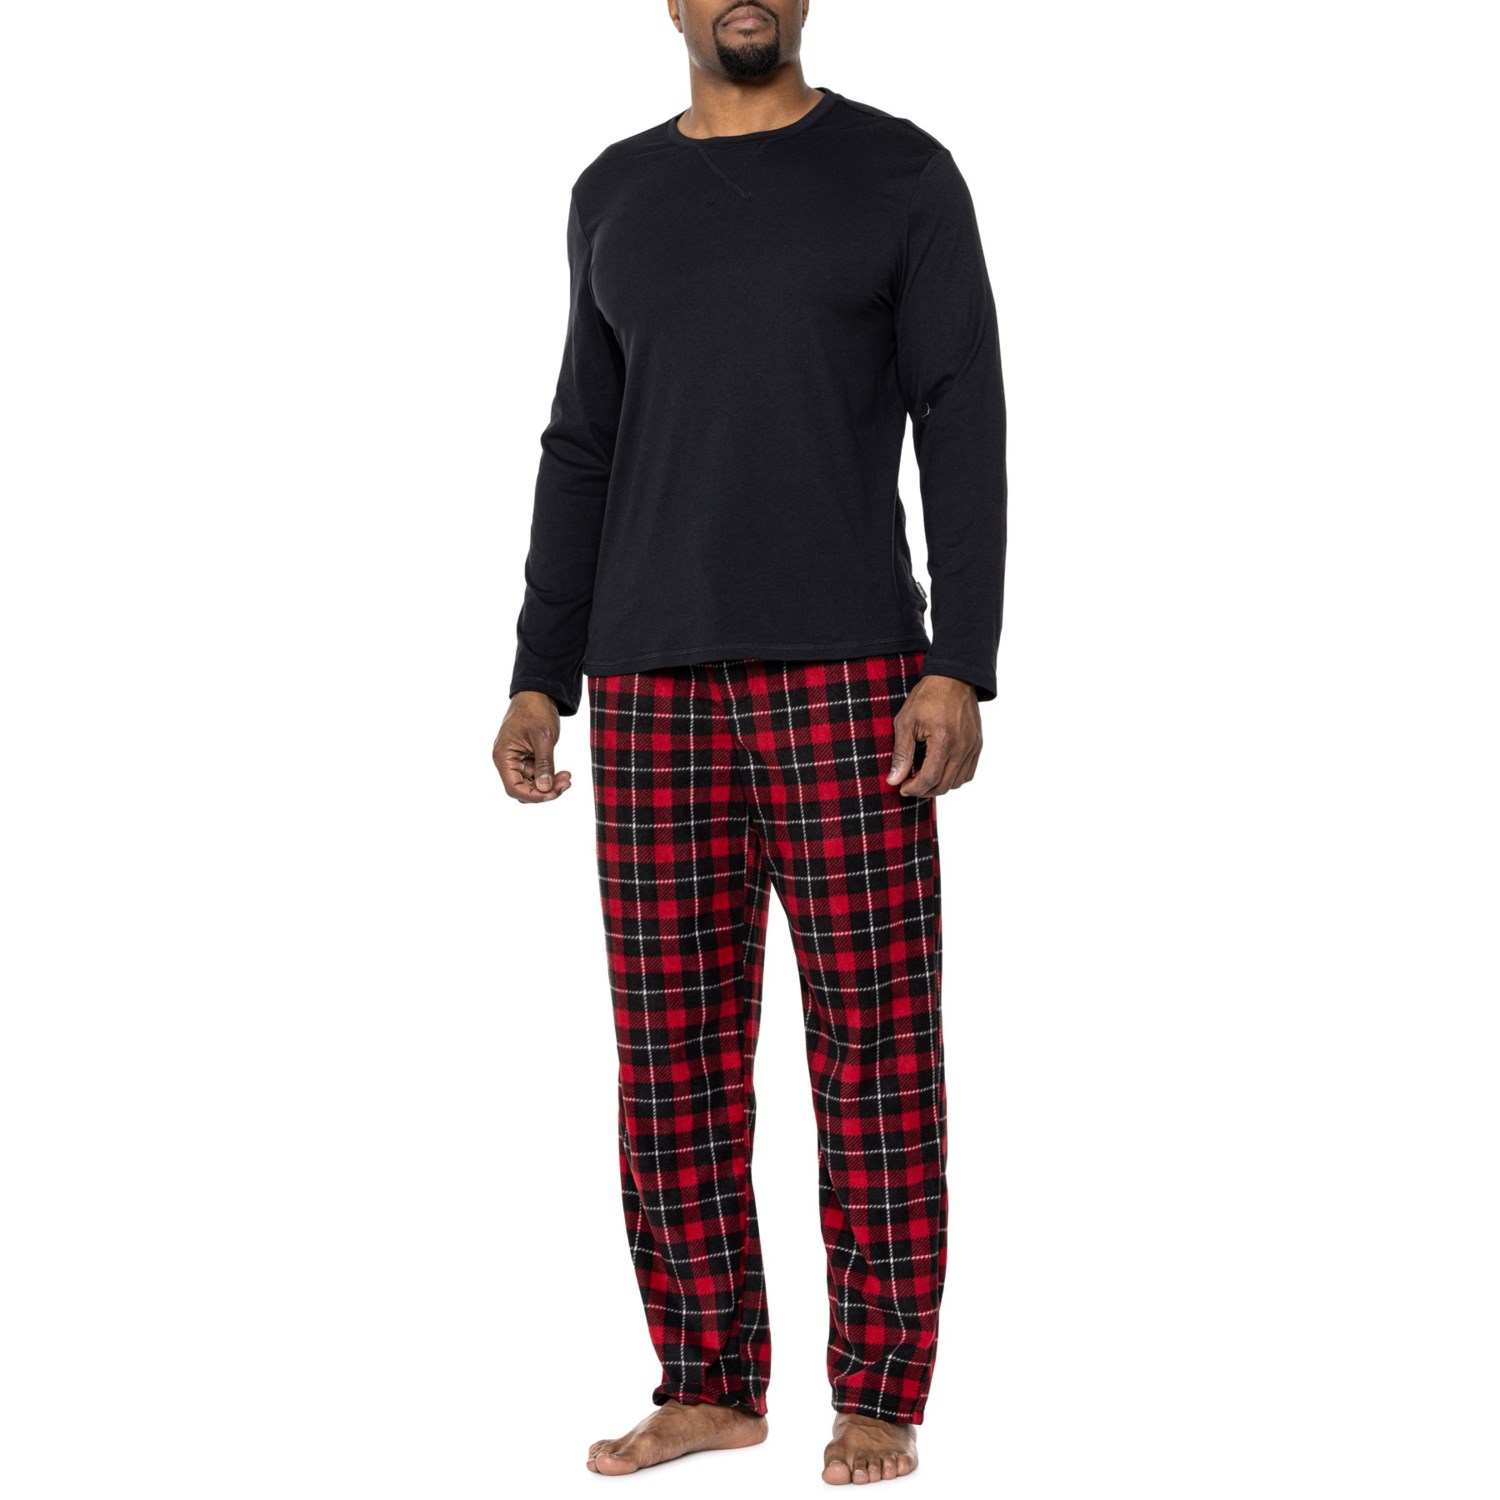 Eddie Bauer Jersey Shirt and Fleece Pants Pajamas - Long Sleeve - Save 72%